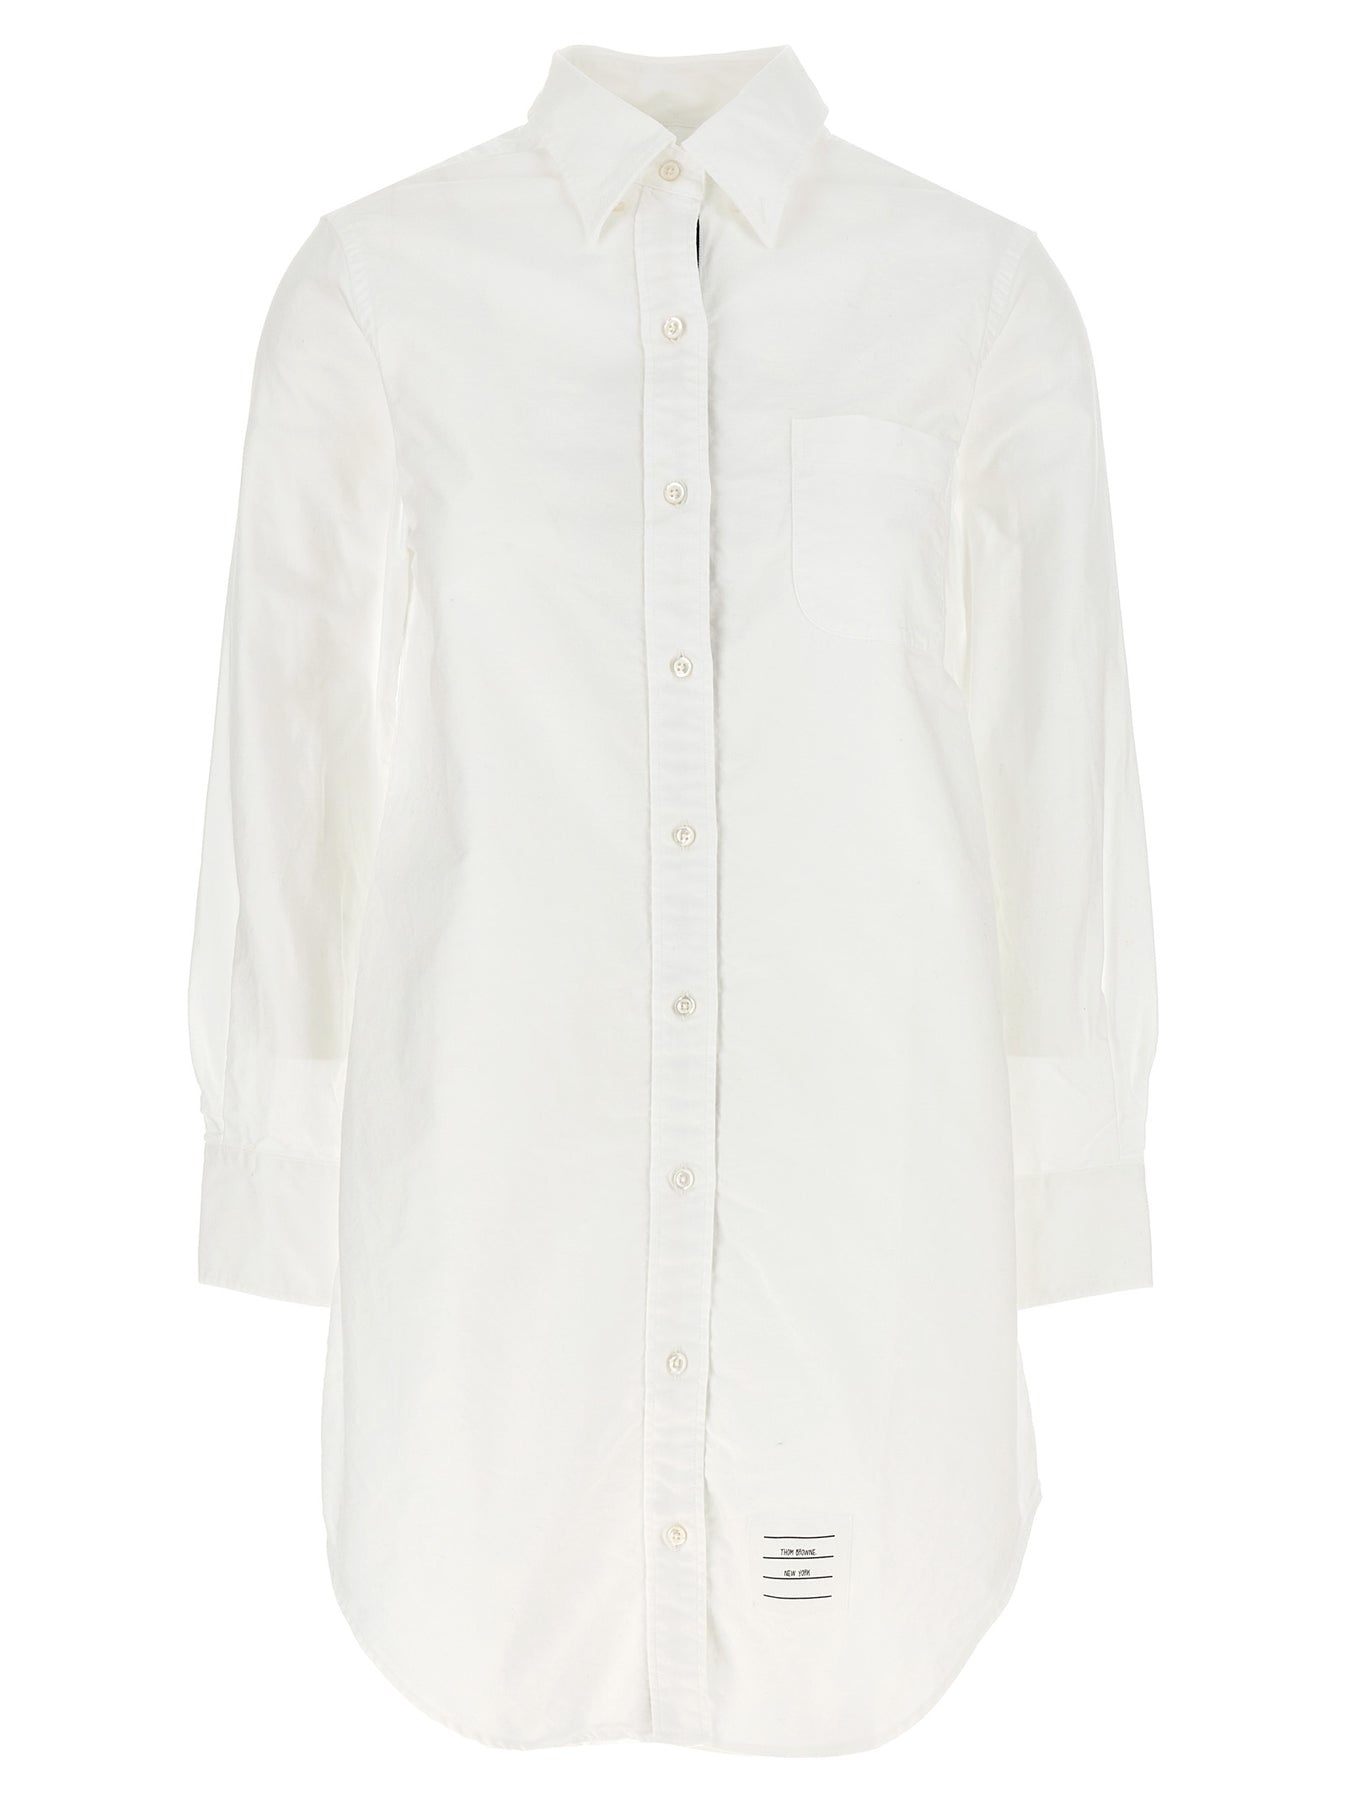 Rwb Shirt, Blouse White - 1